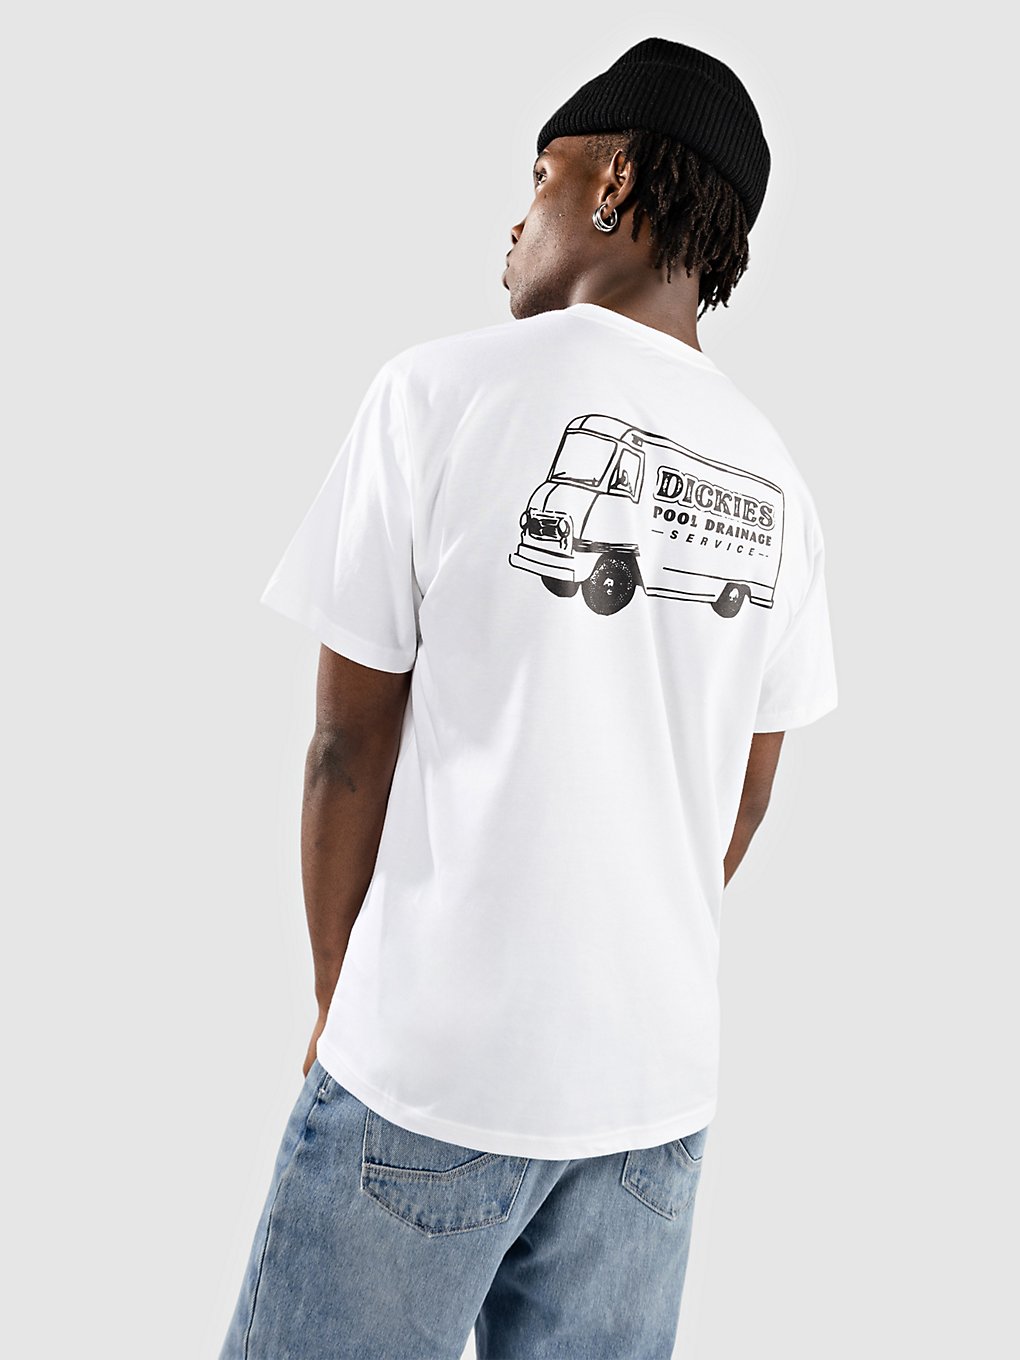 Dickies Edgerton T-Shirt white kaufen